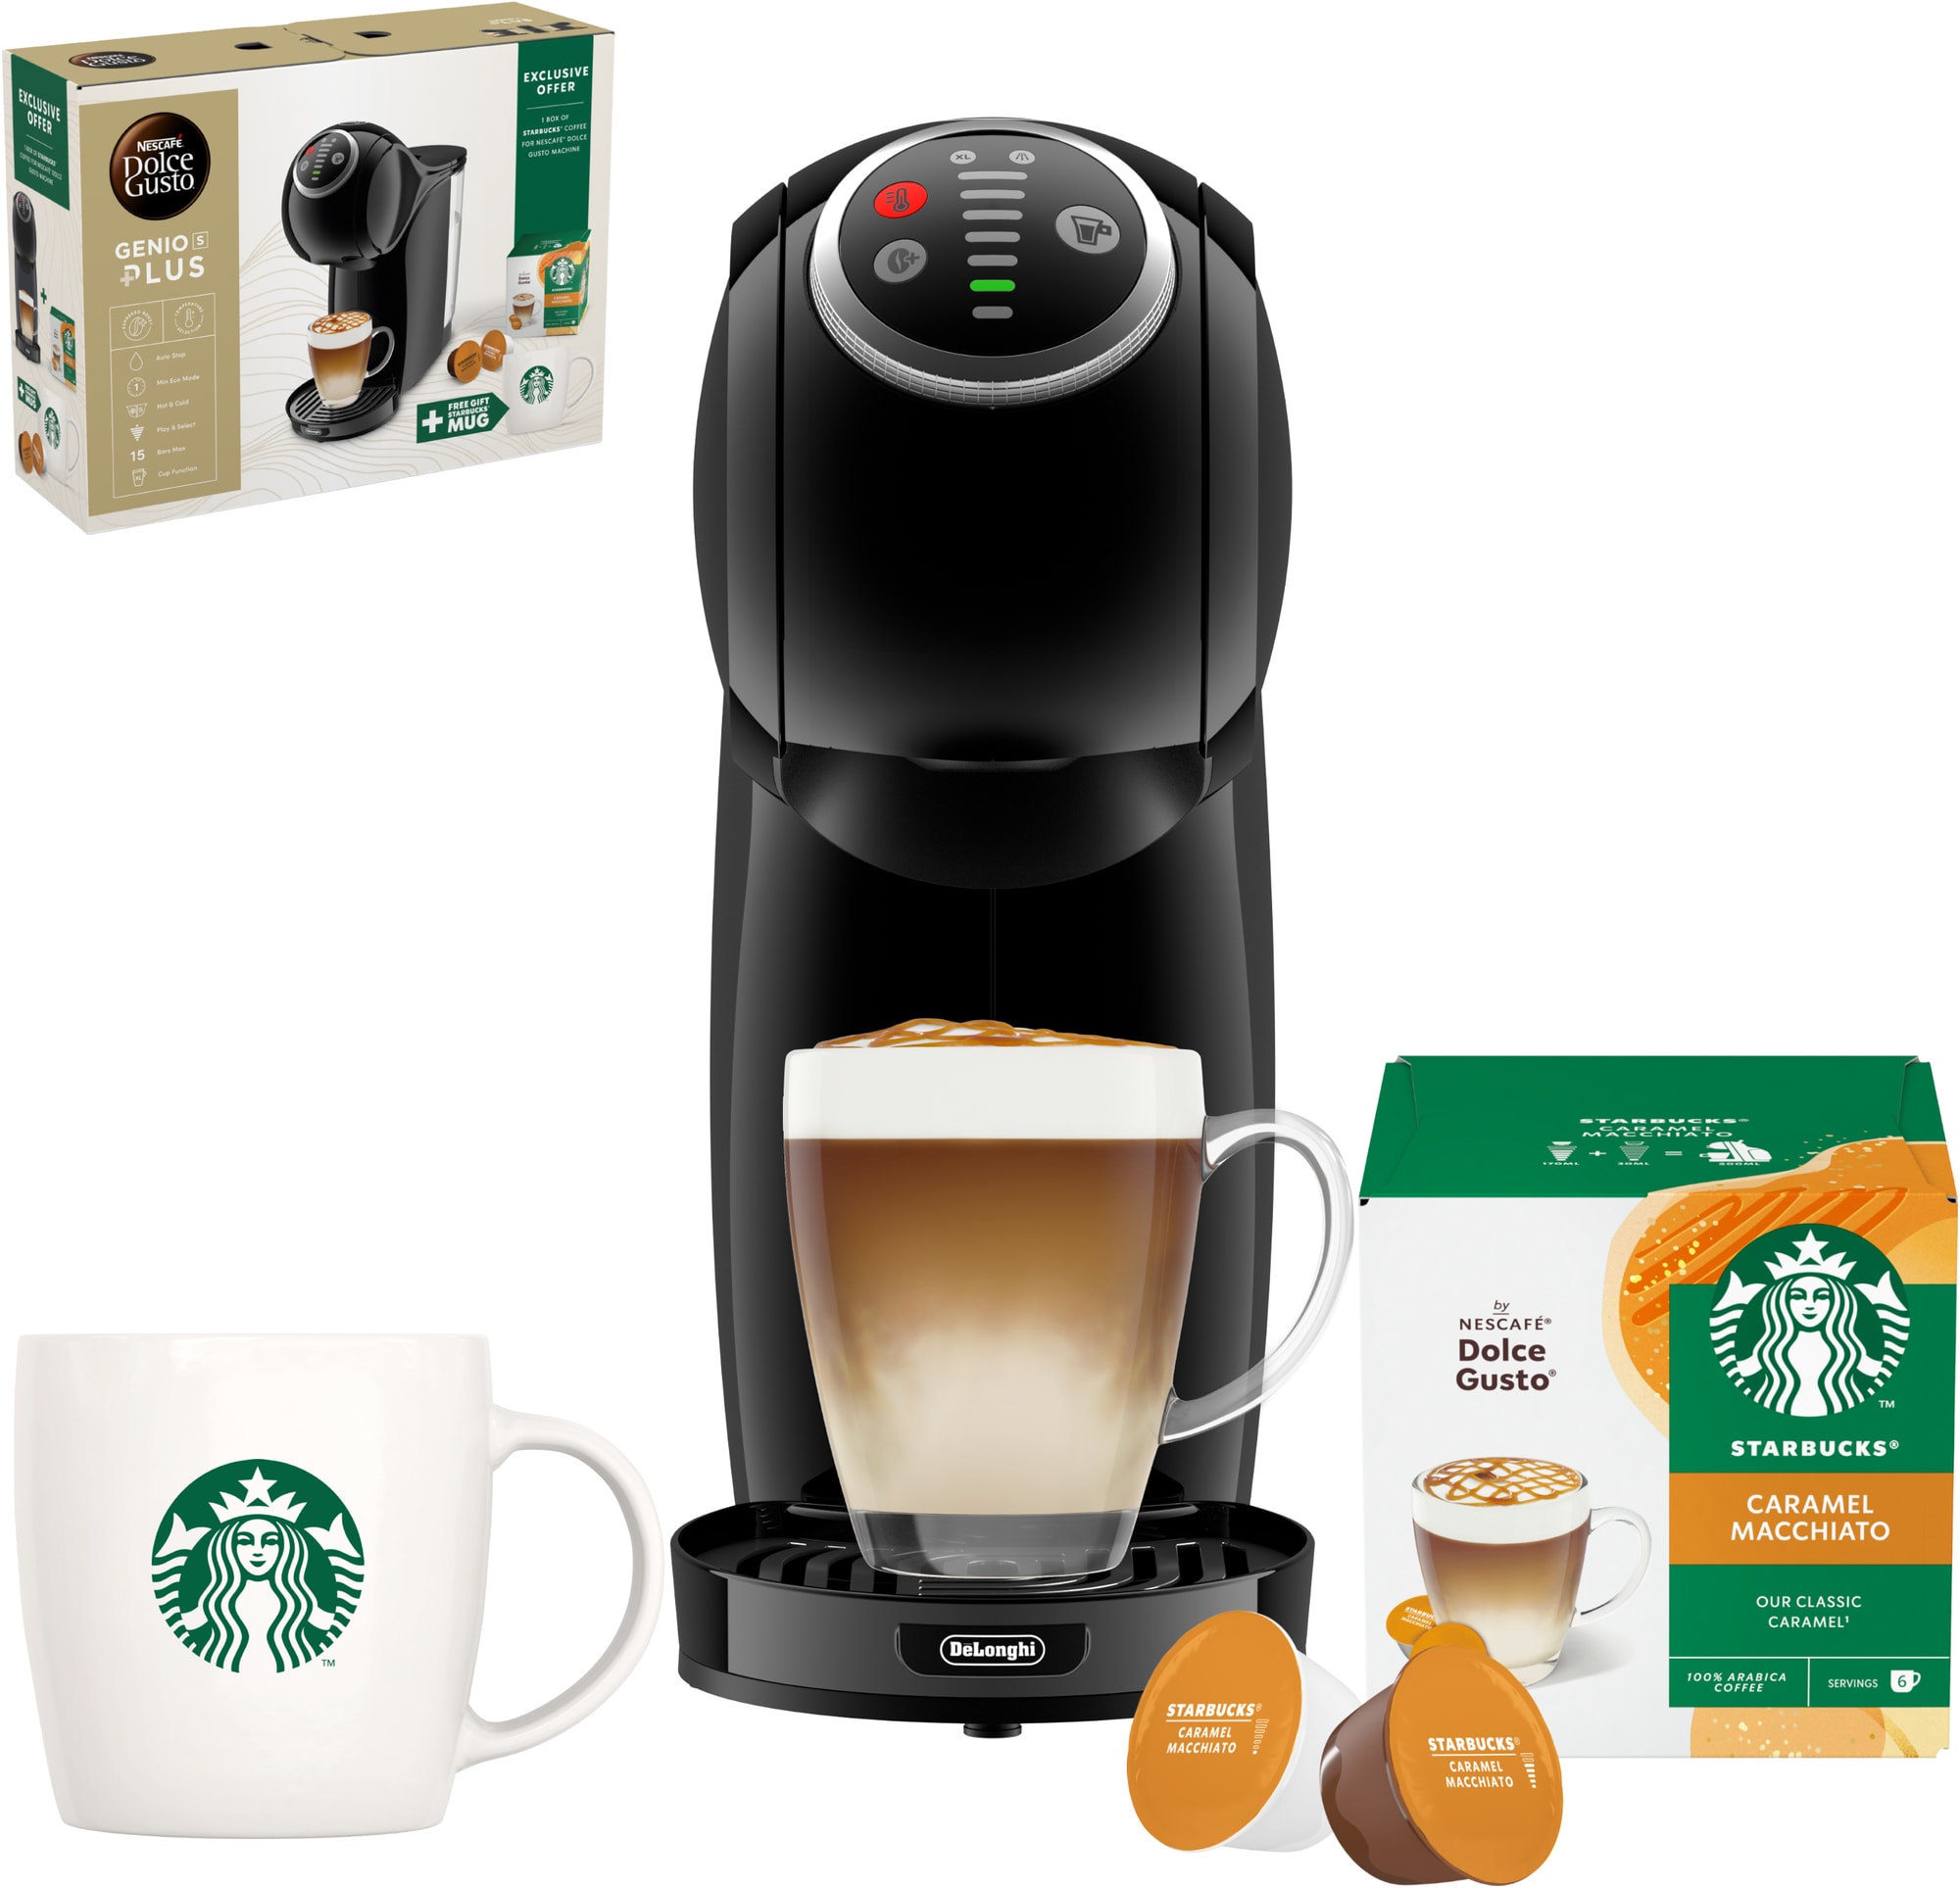 Nescafé Dolce Gusto Genio S Plus kapselmaskine med Starbuckspakke thumbnail